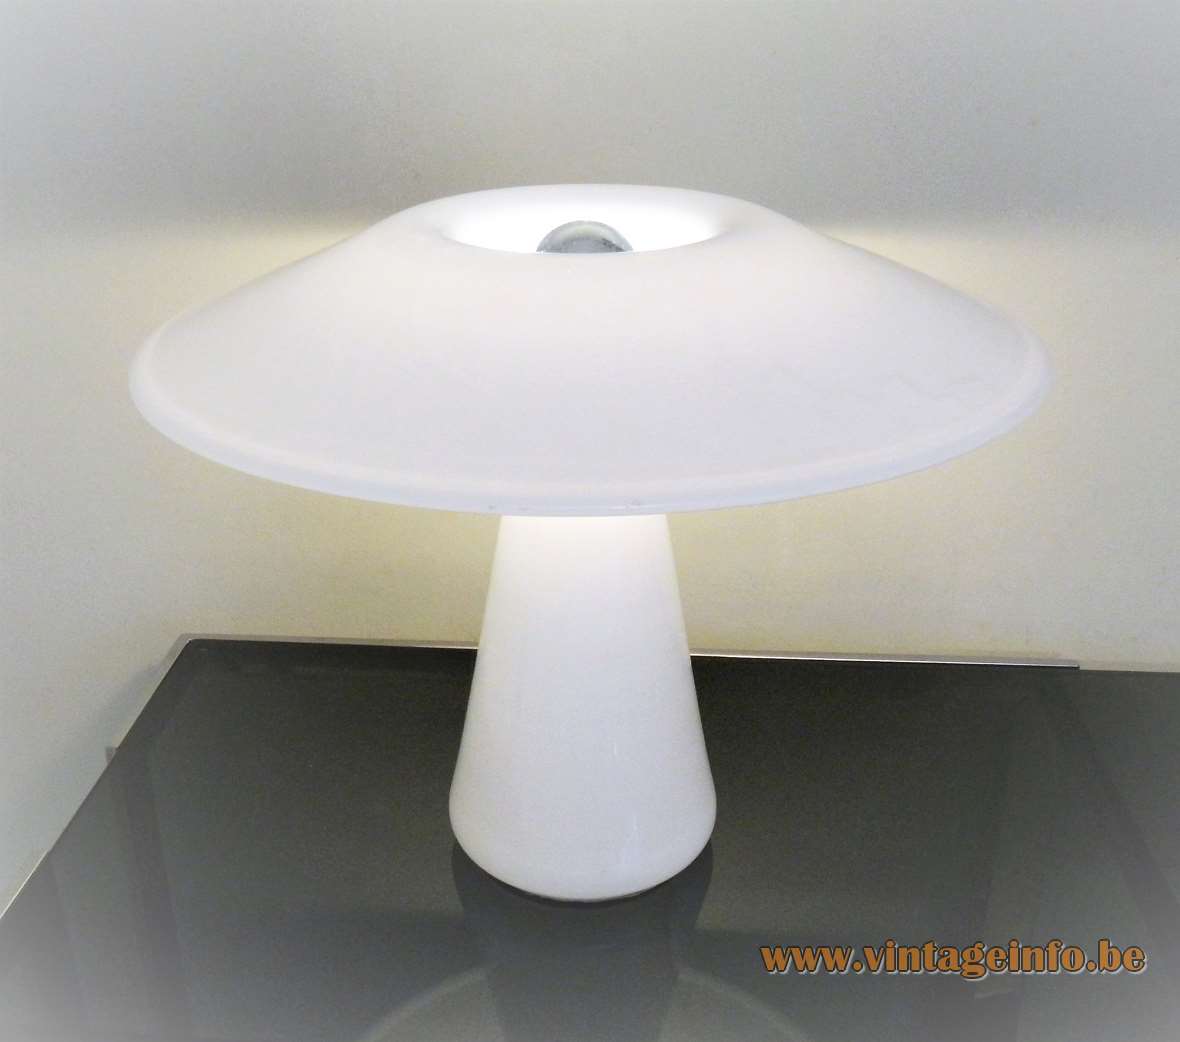 Holmegaard Phoenix table lamp design: Sidse Werner white opal glass mushroom lampshade 1980s Denmark E27 socket 